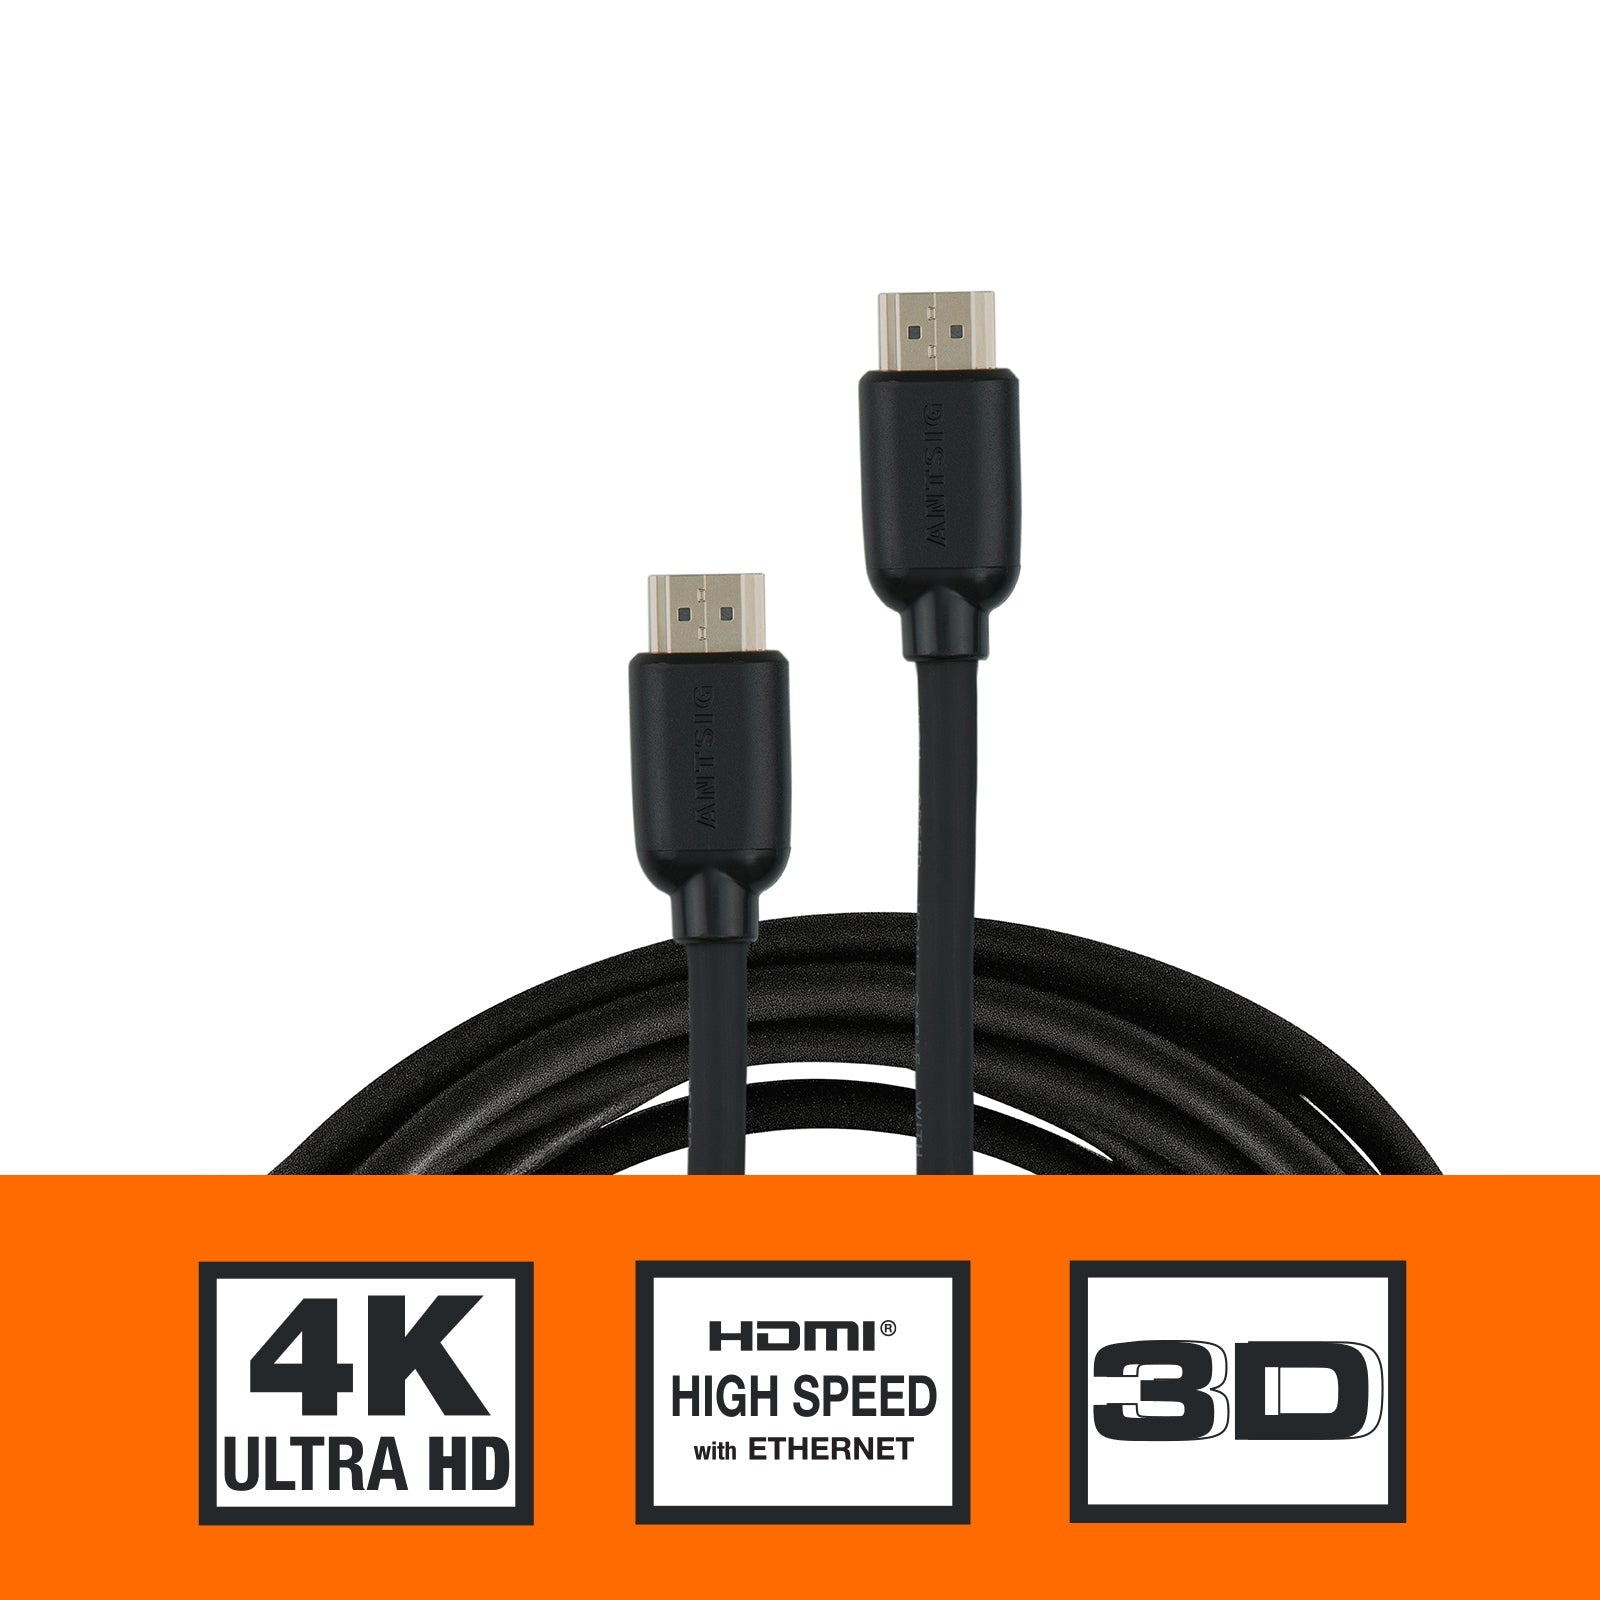 GENERICO Cable HDMI 5m nex. Cable HDMI 5m. nex Cable HDMI 5m nex